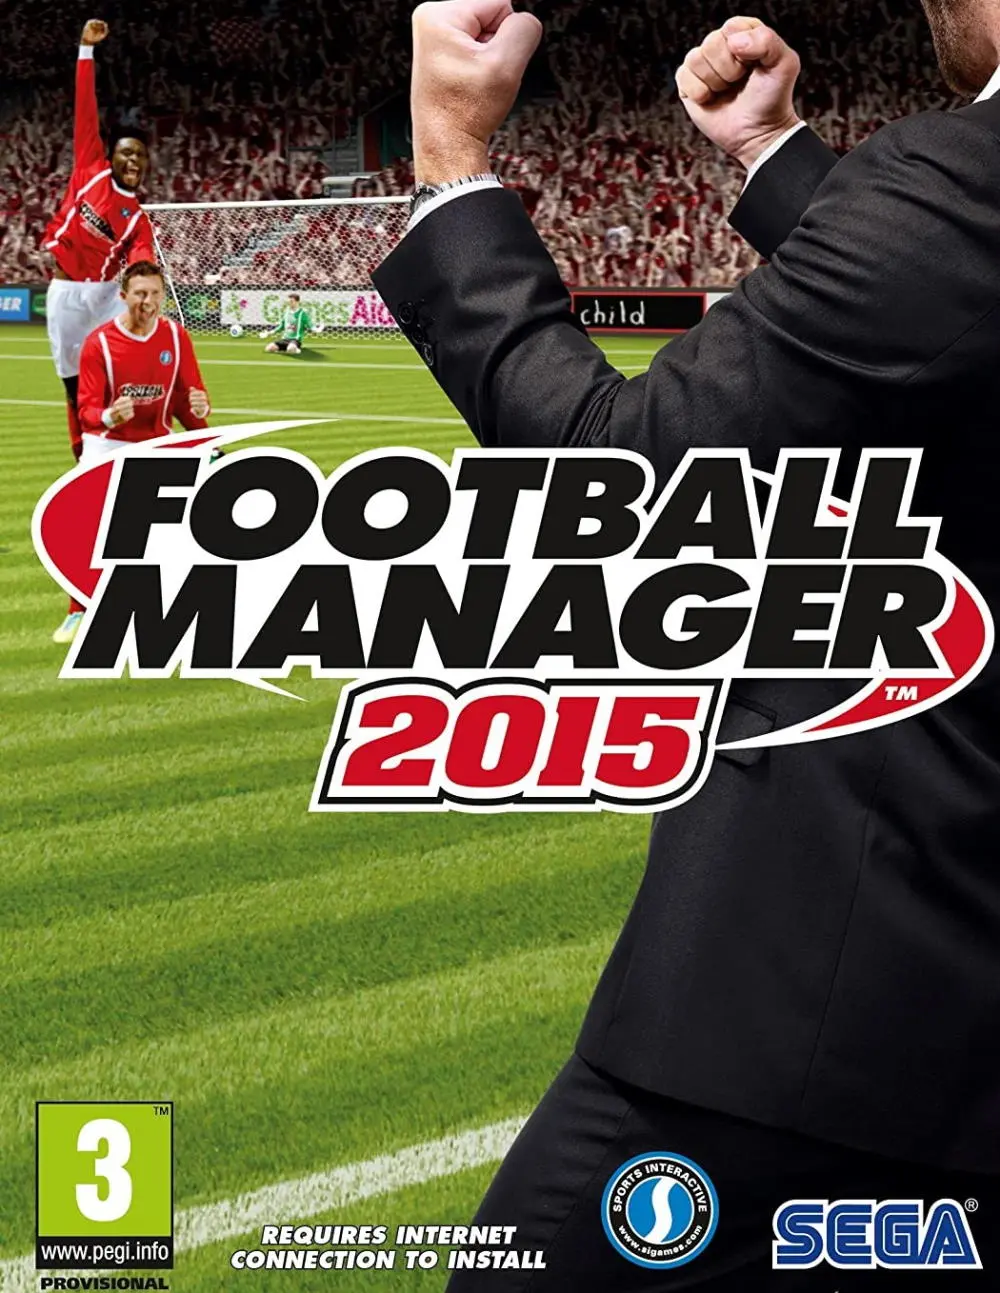 Football Manager 2015 (EU) (PC / Mac / Linux) - Steam - Digital Code